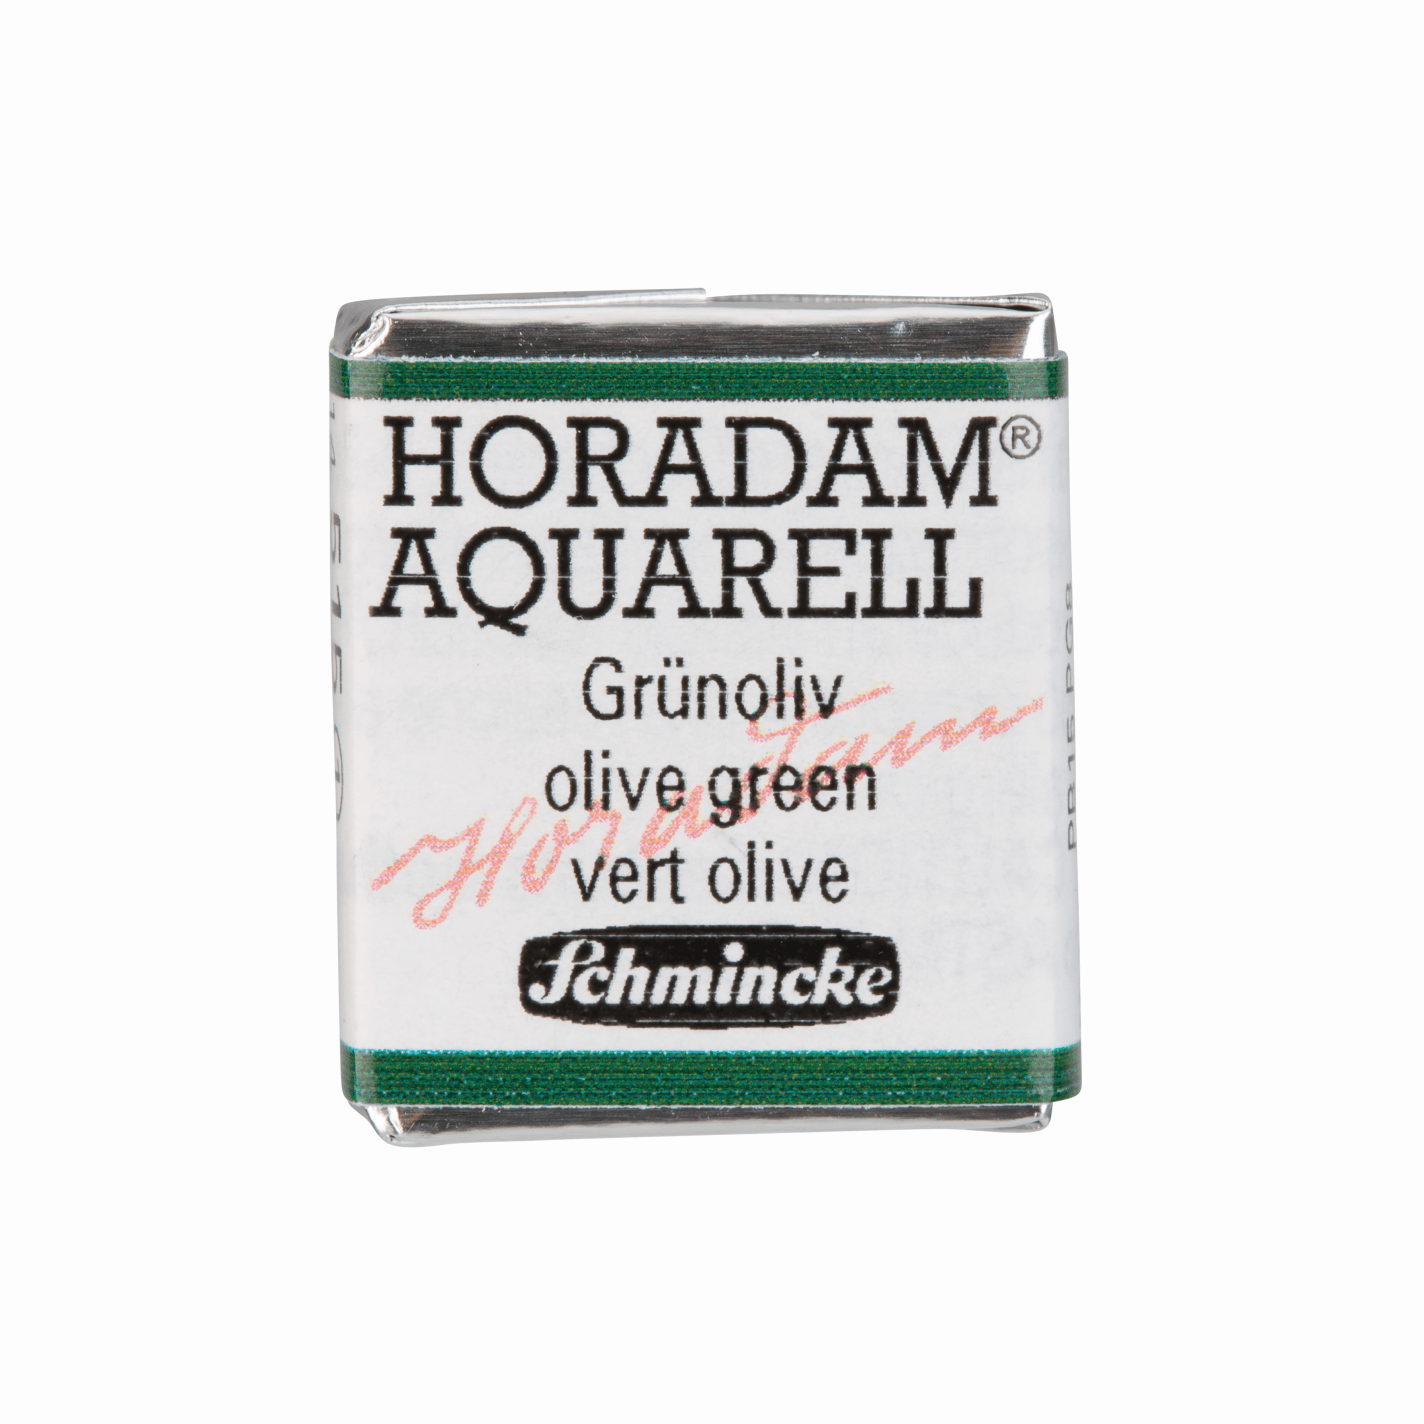 Schmincke Horadam Aquarell pans 1/2 pan Olive Green